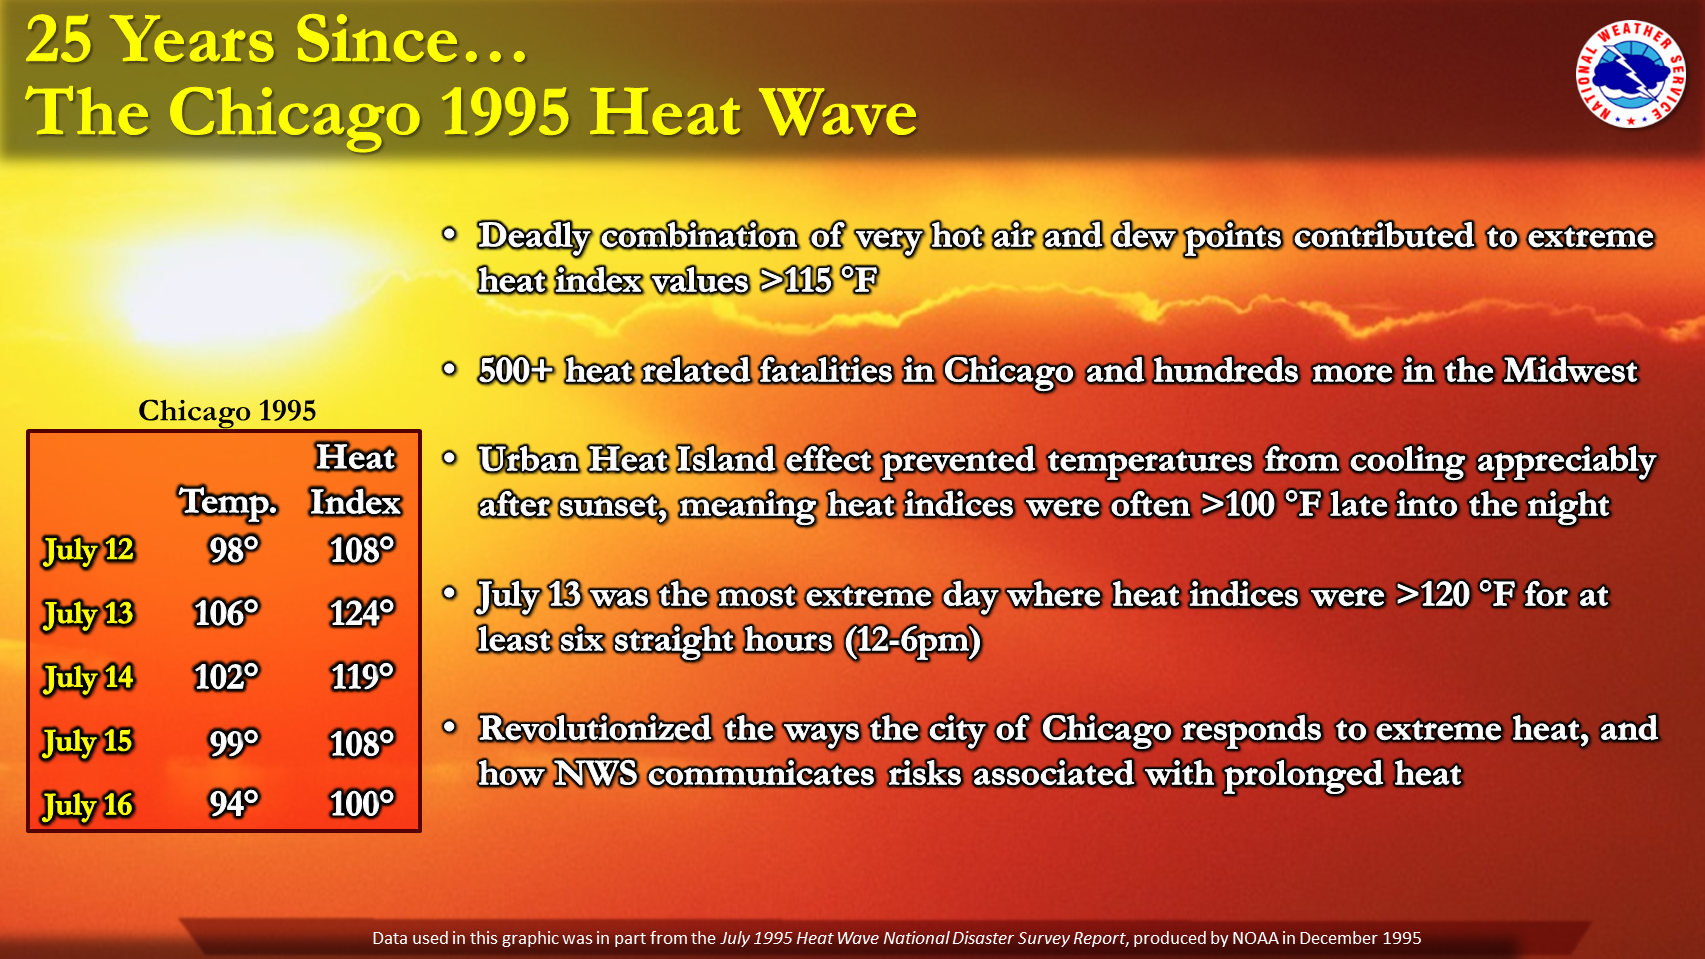 Statistics from 1995 Chicago Heat Wave